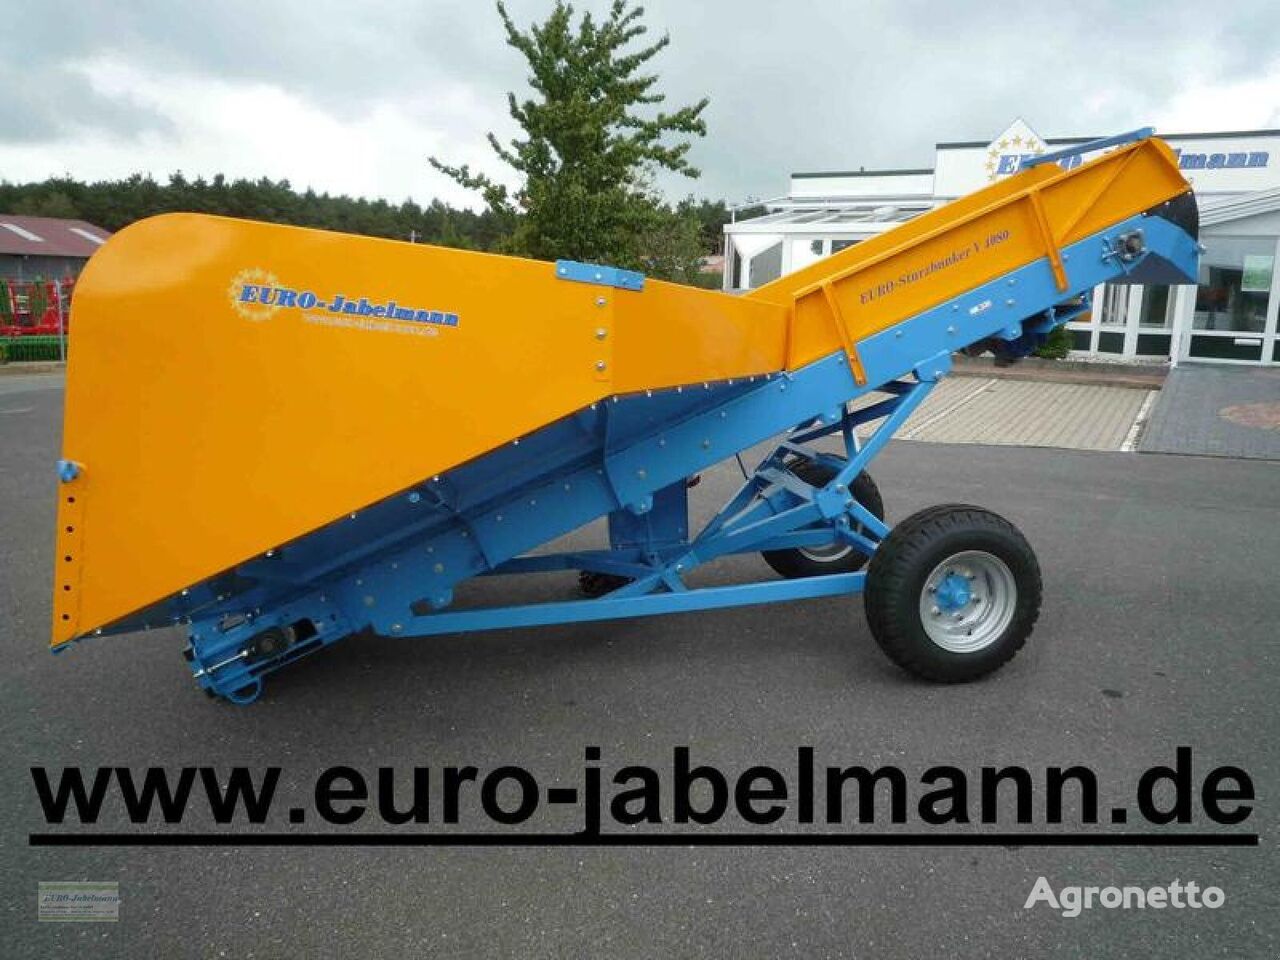 ny Euro-Jabelmann 3 Modelle, eigene Herstellung (Made in Germany) indlagringstank